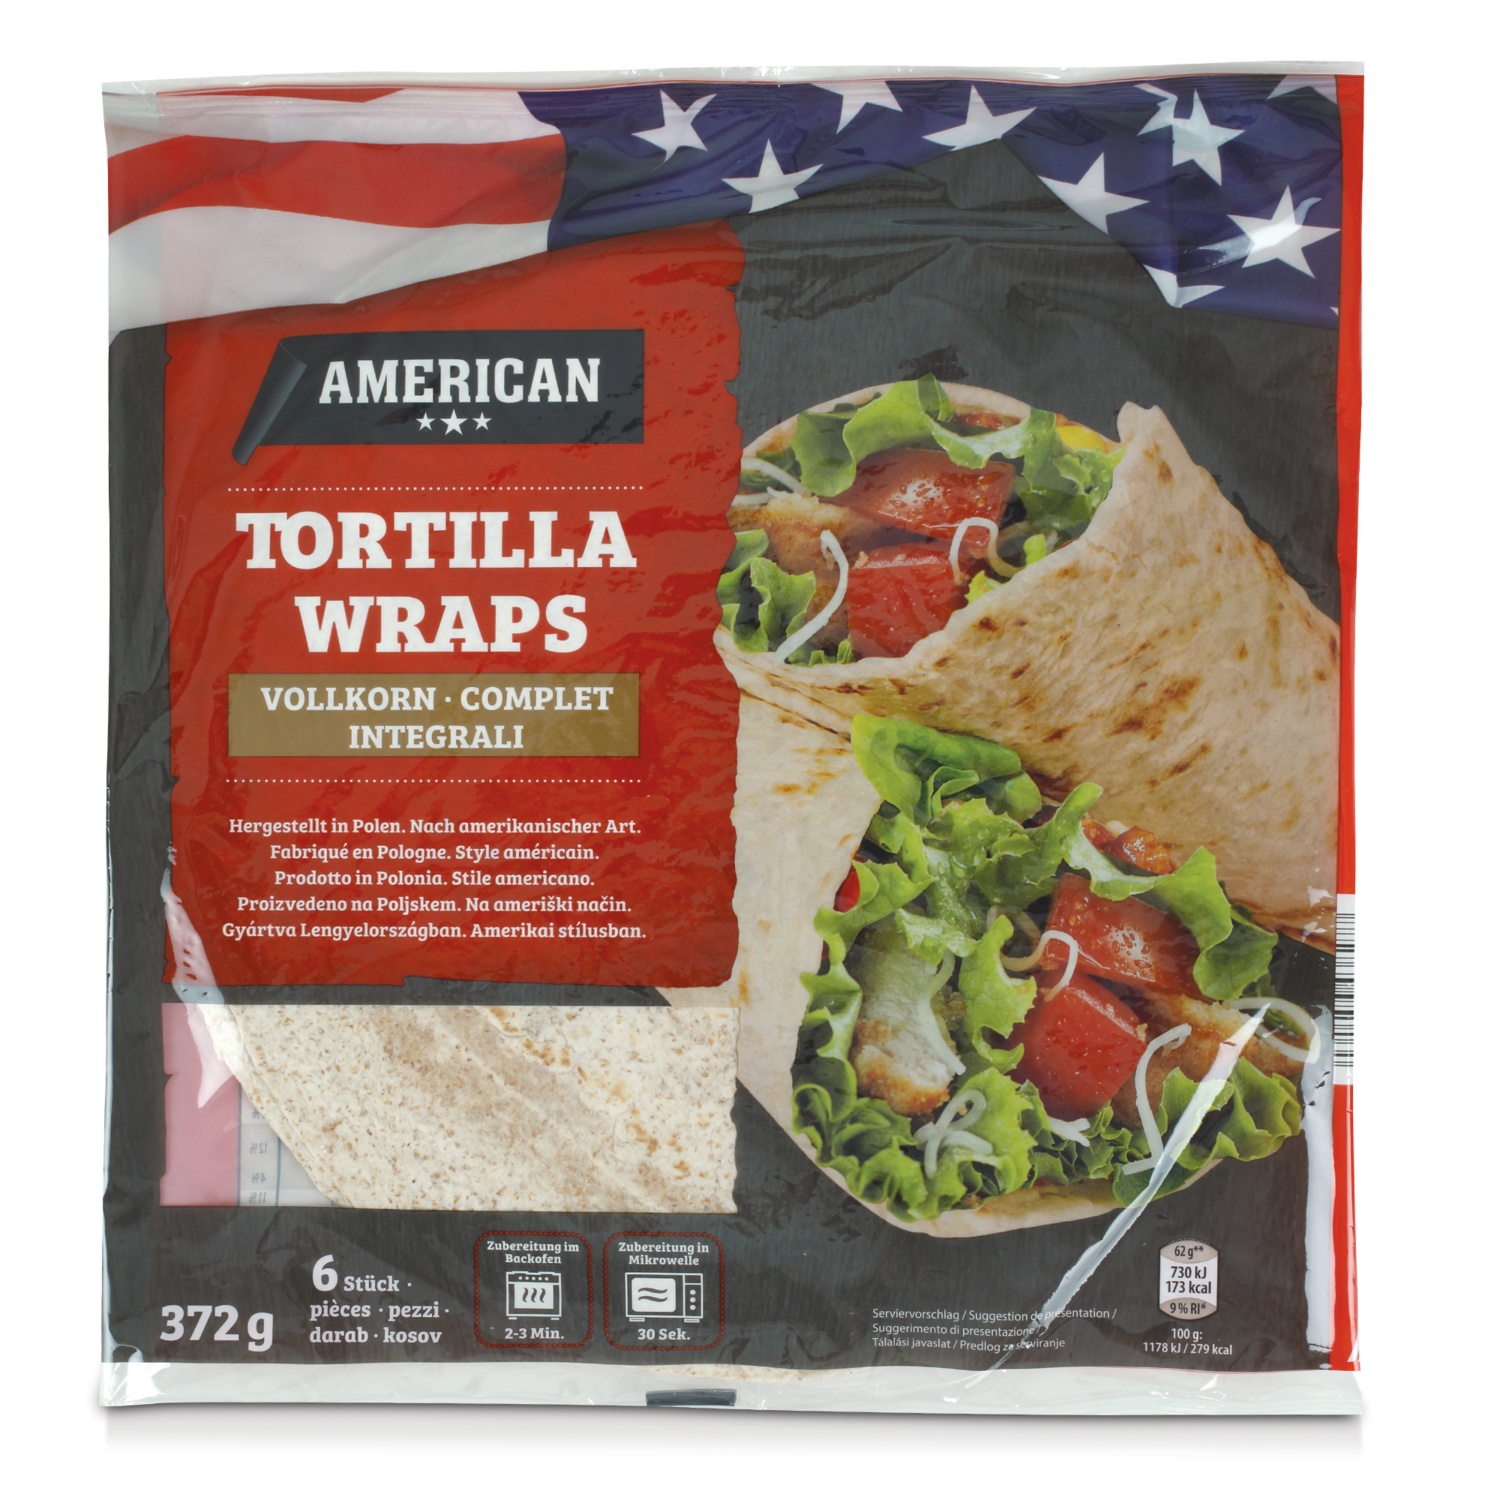 AMERICAN Tortilla wraps integrali